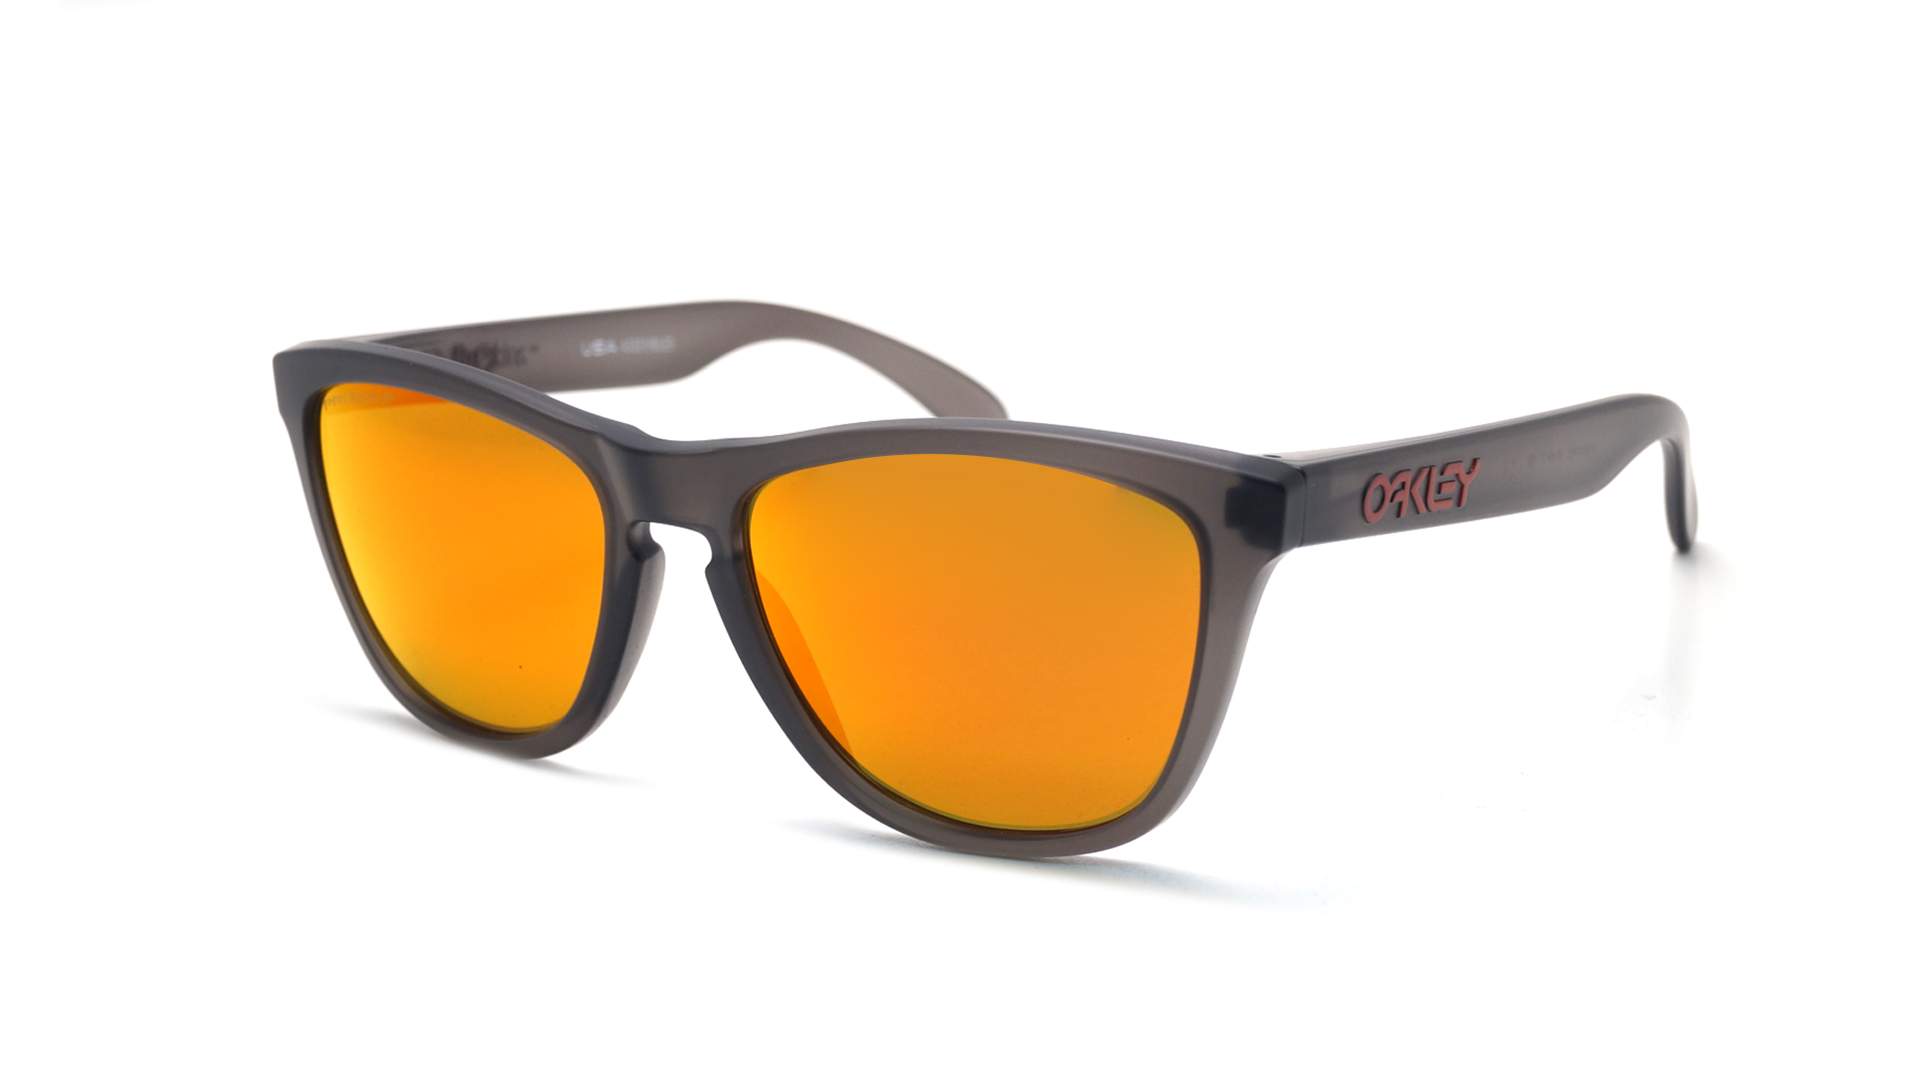 oakley frogskins polarized sunglasses